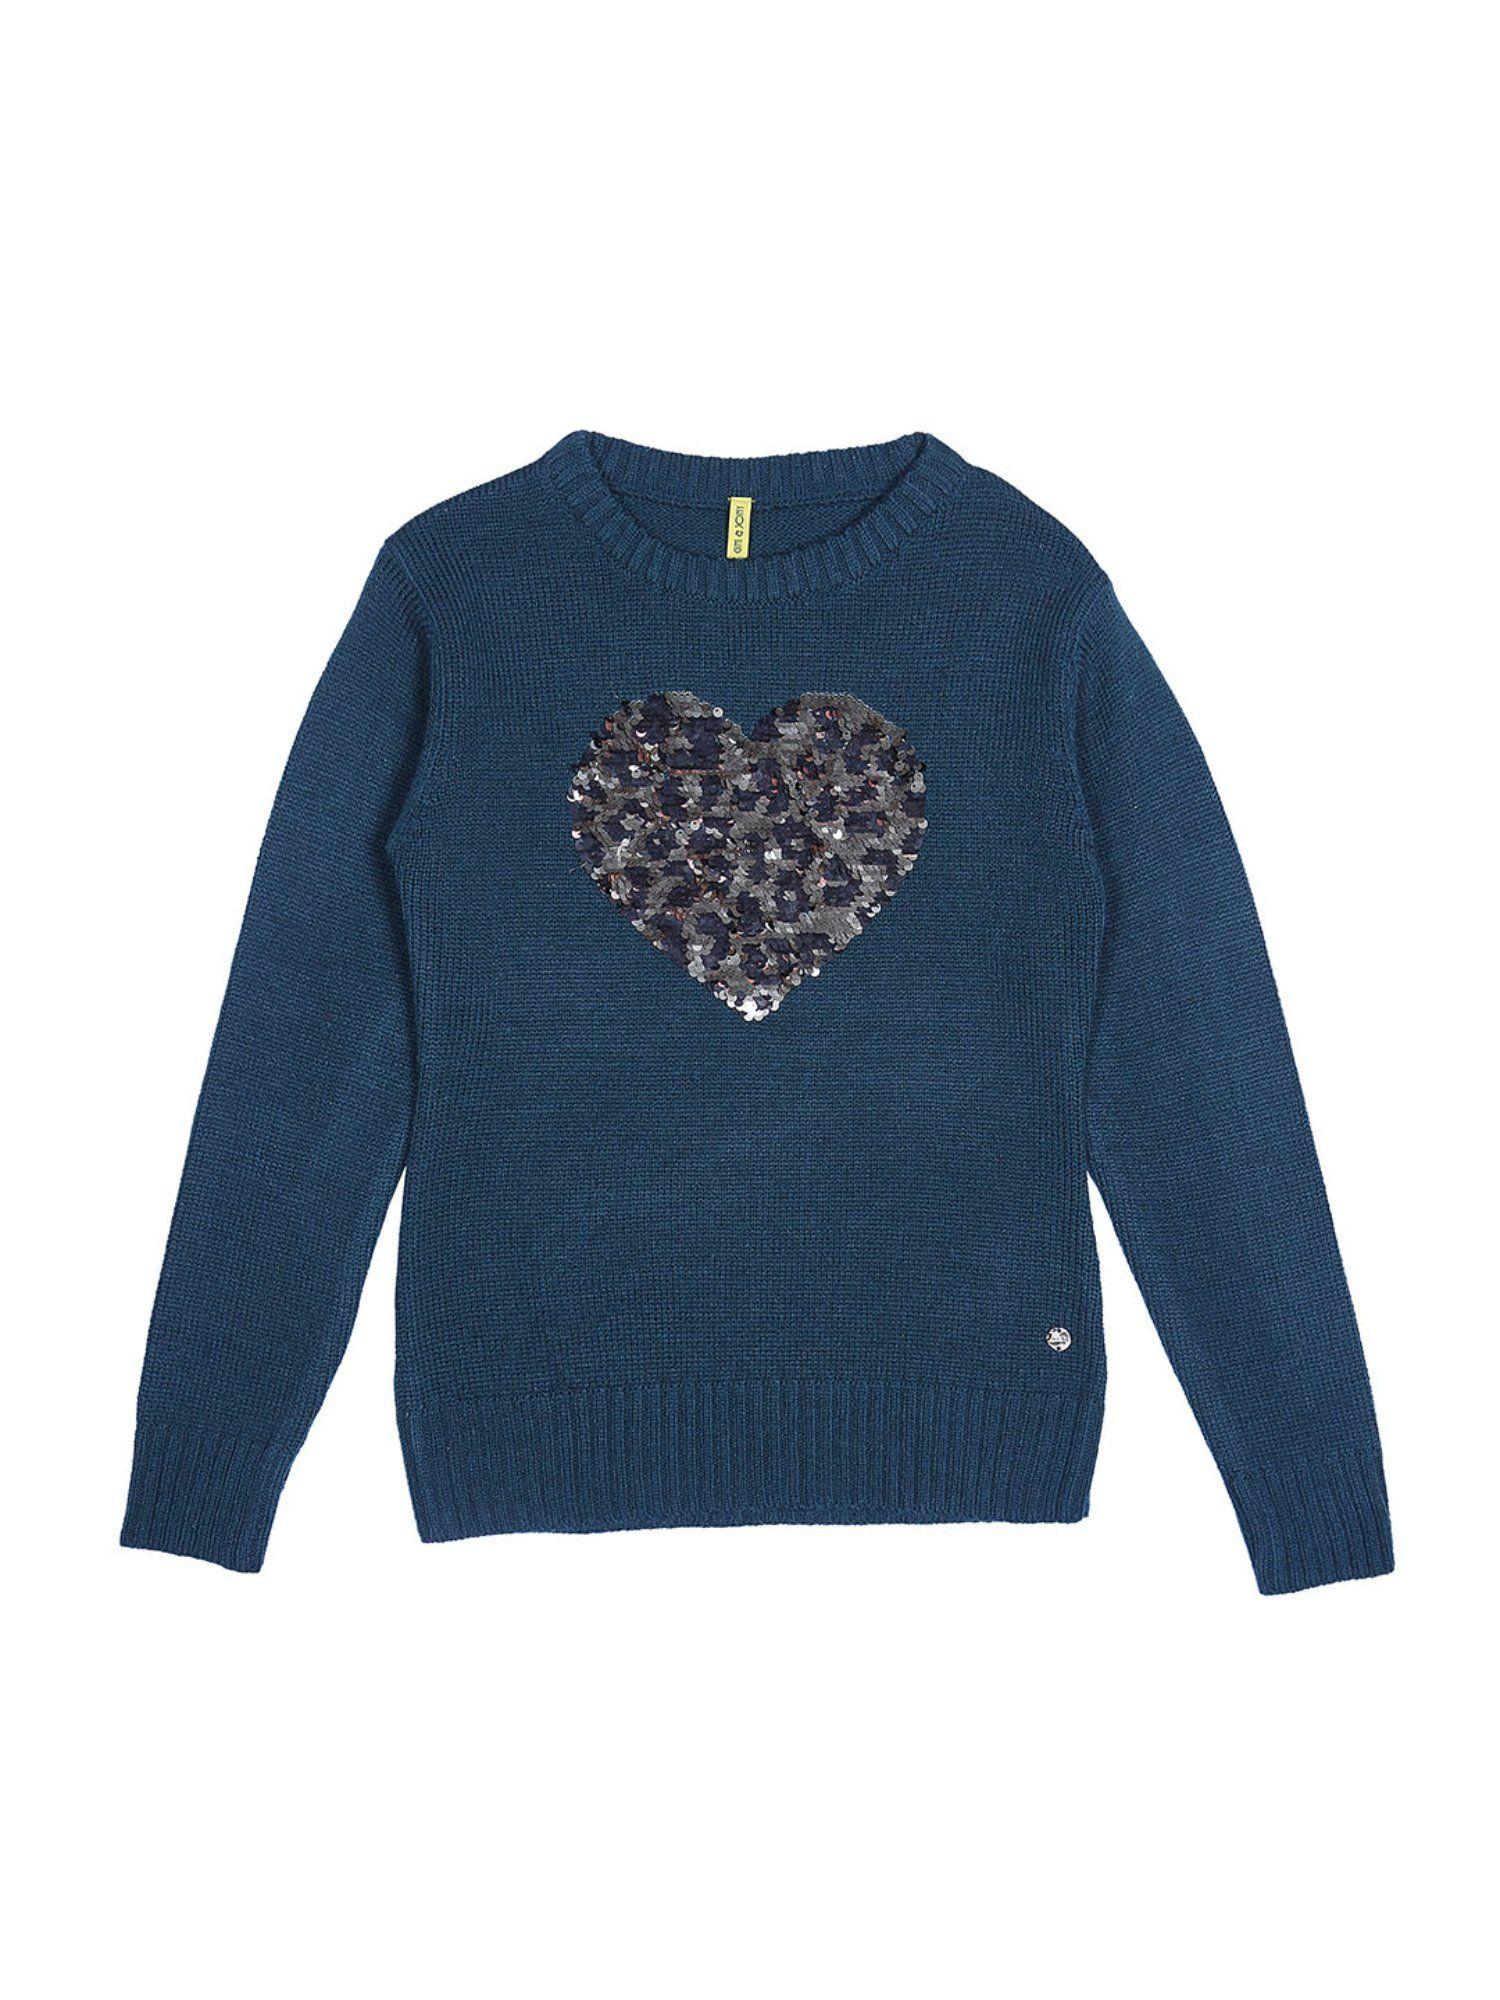 girls-navy-blue-embellished-cotton-sweater-full-sleeves